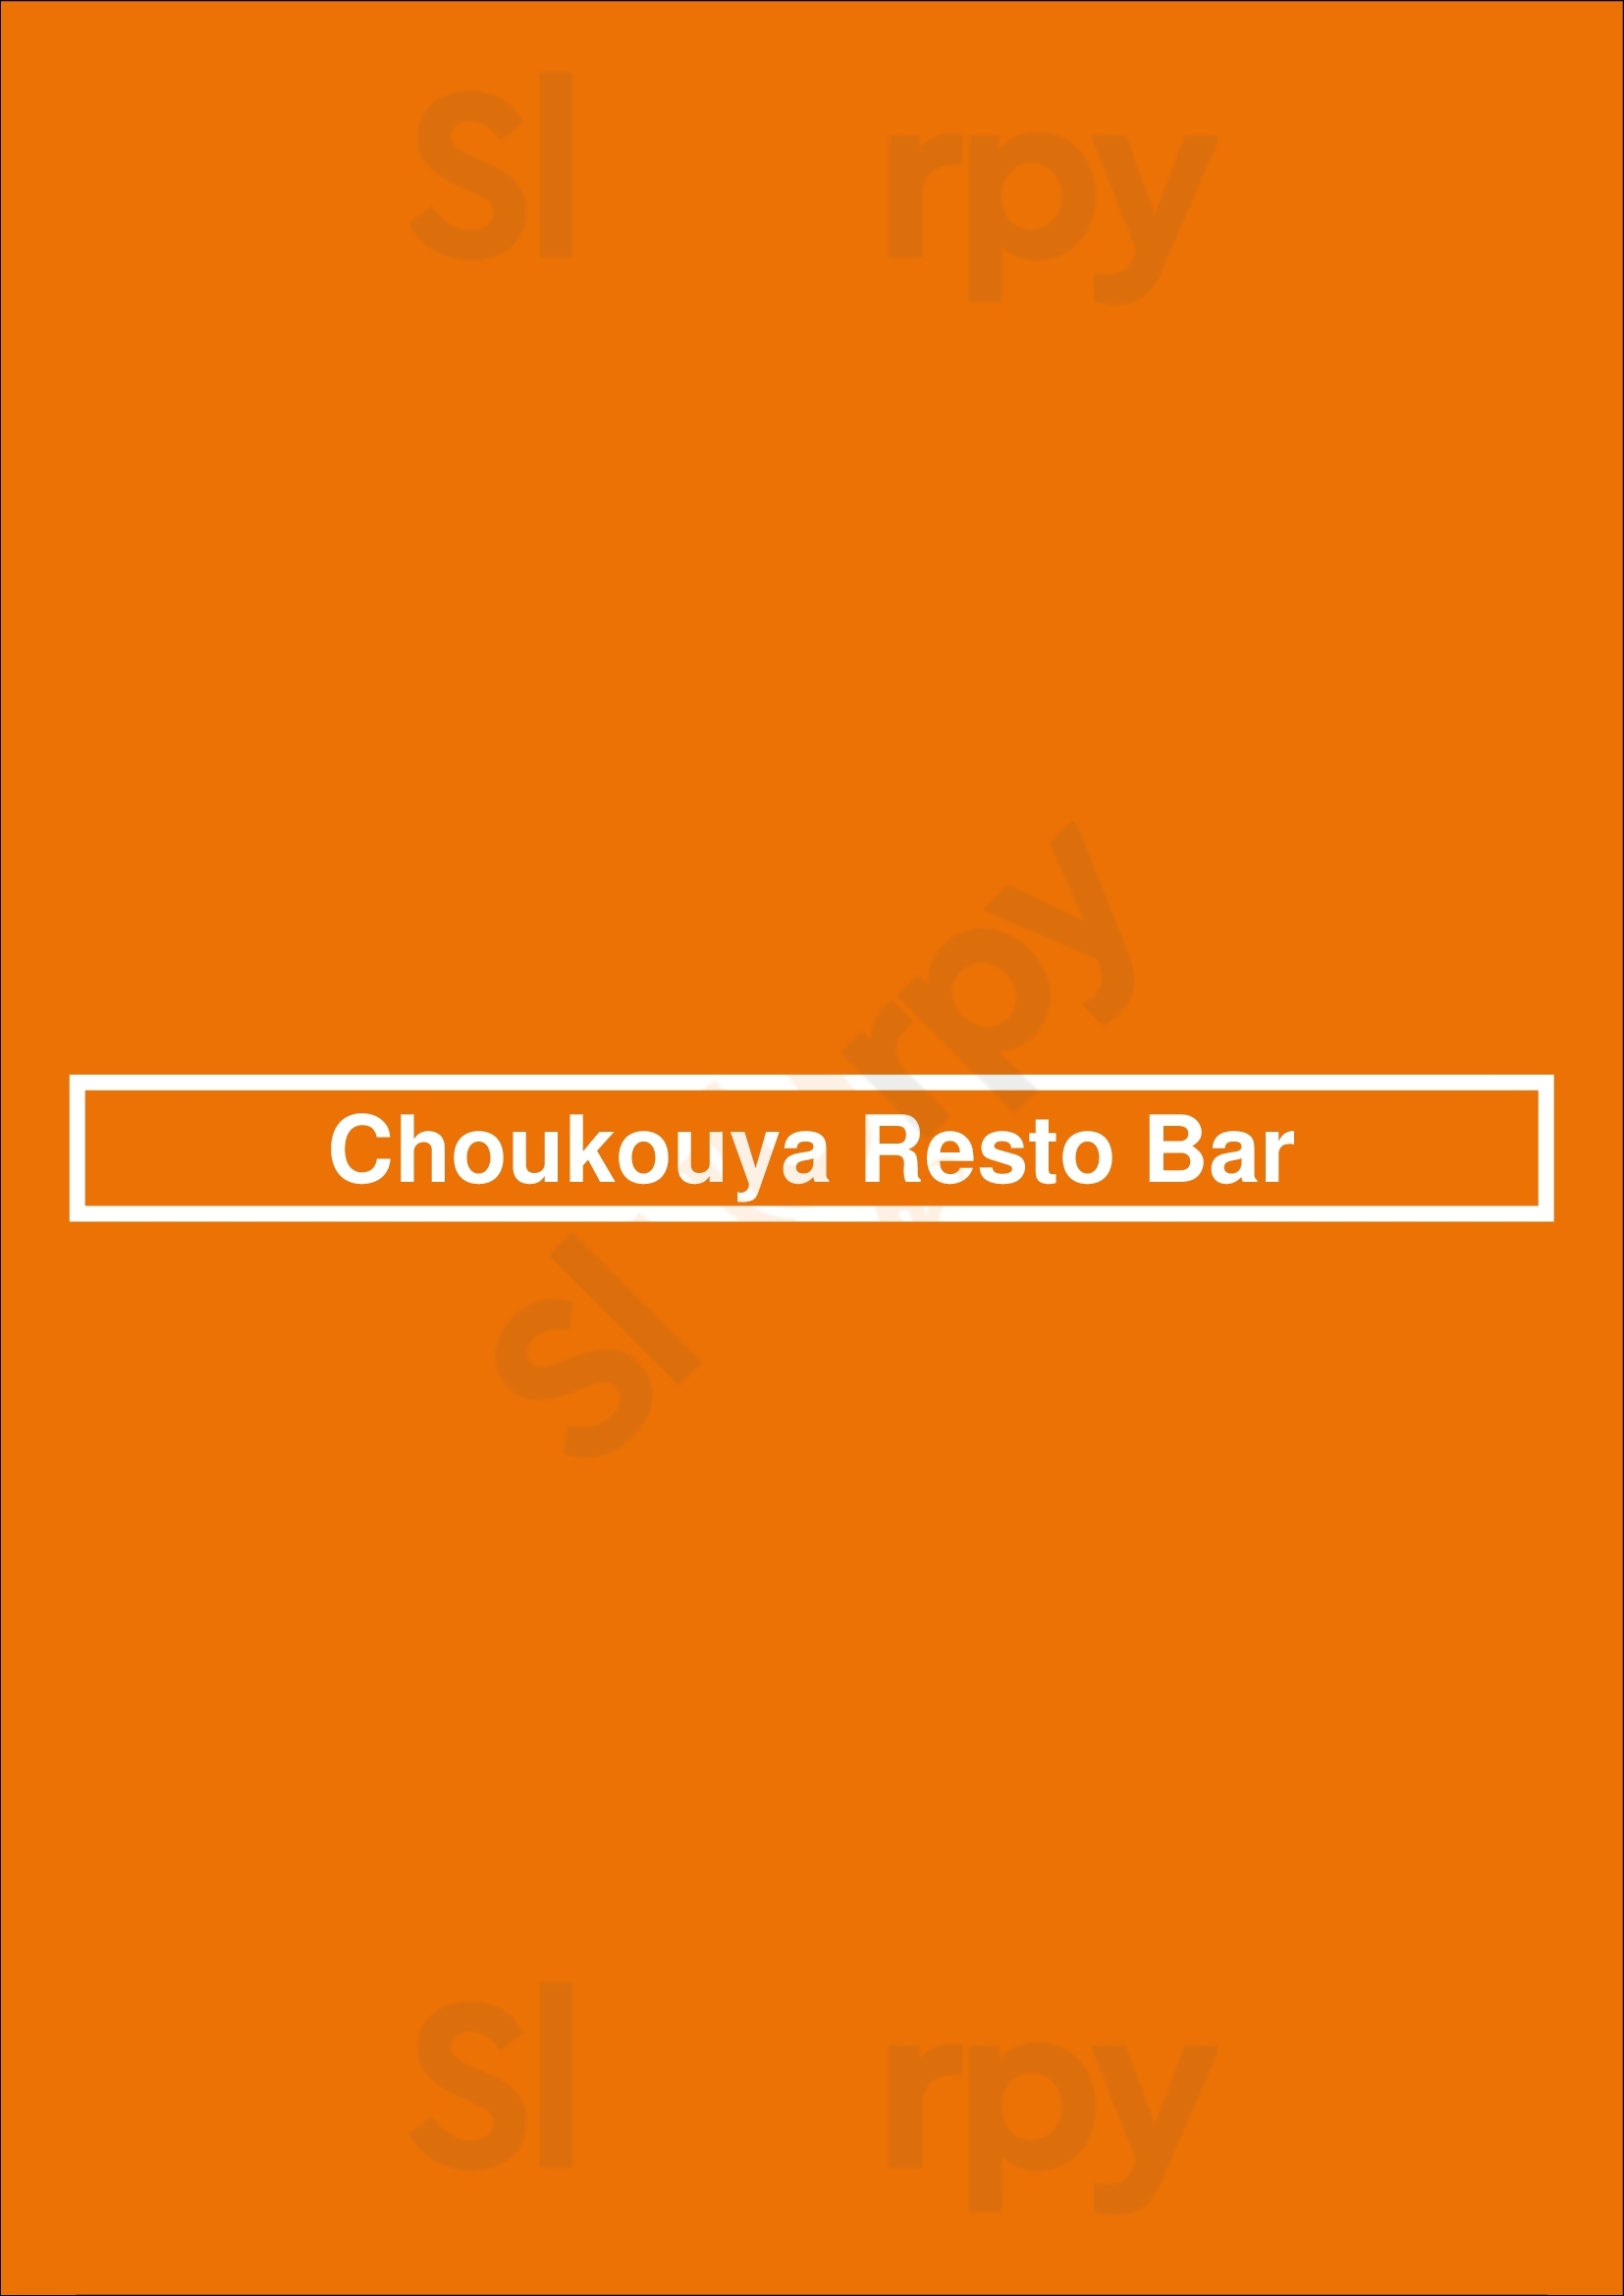 Choukouya Resto Bar Cleveland Menu - 1